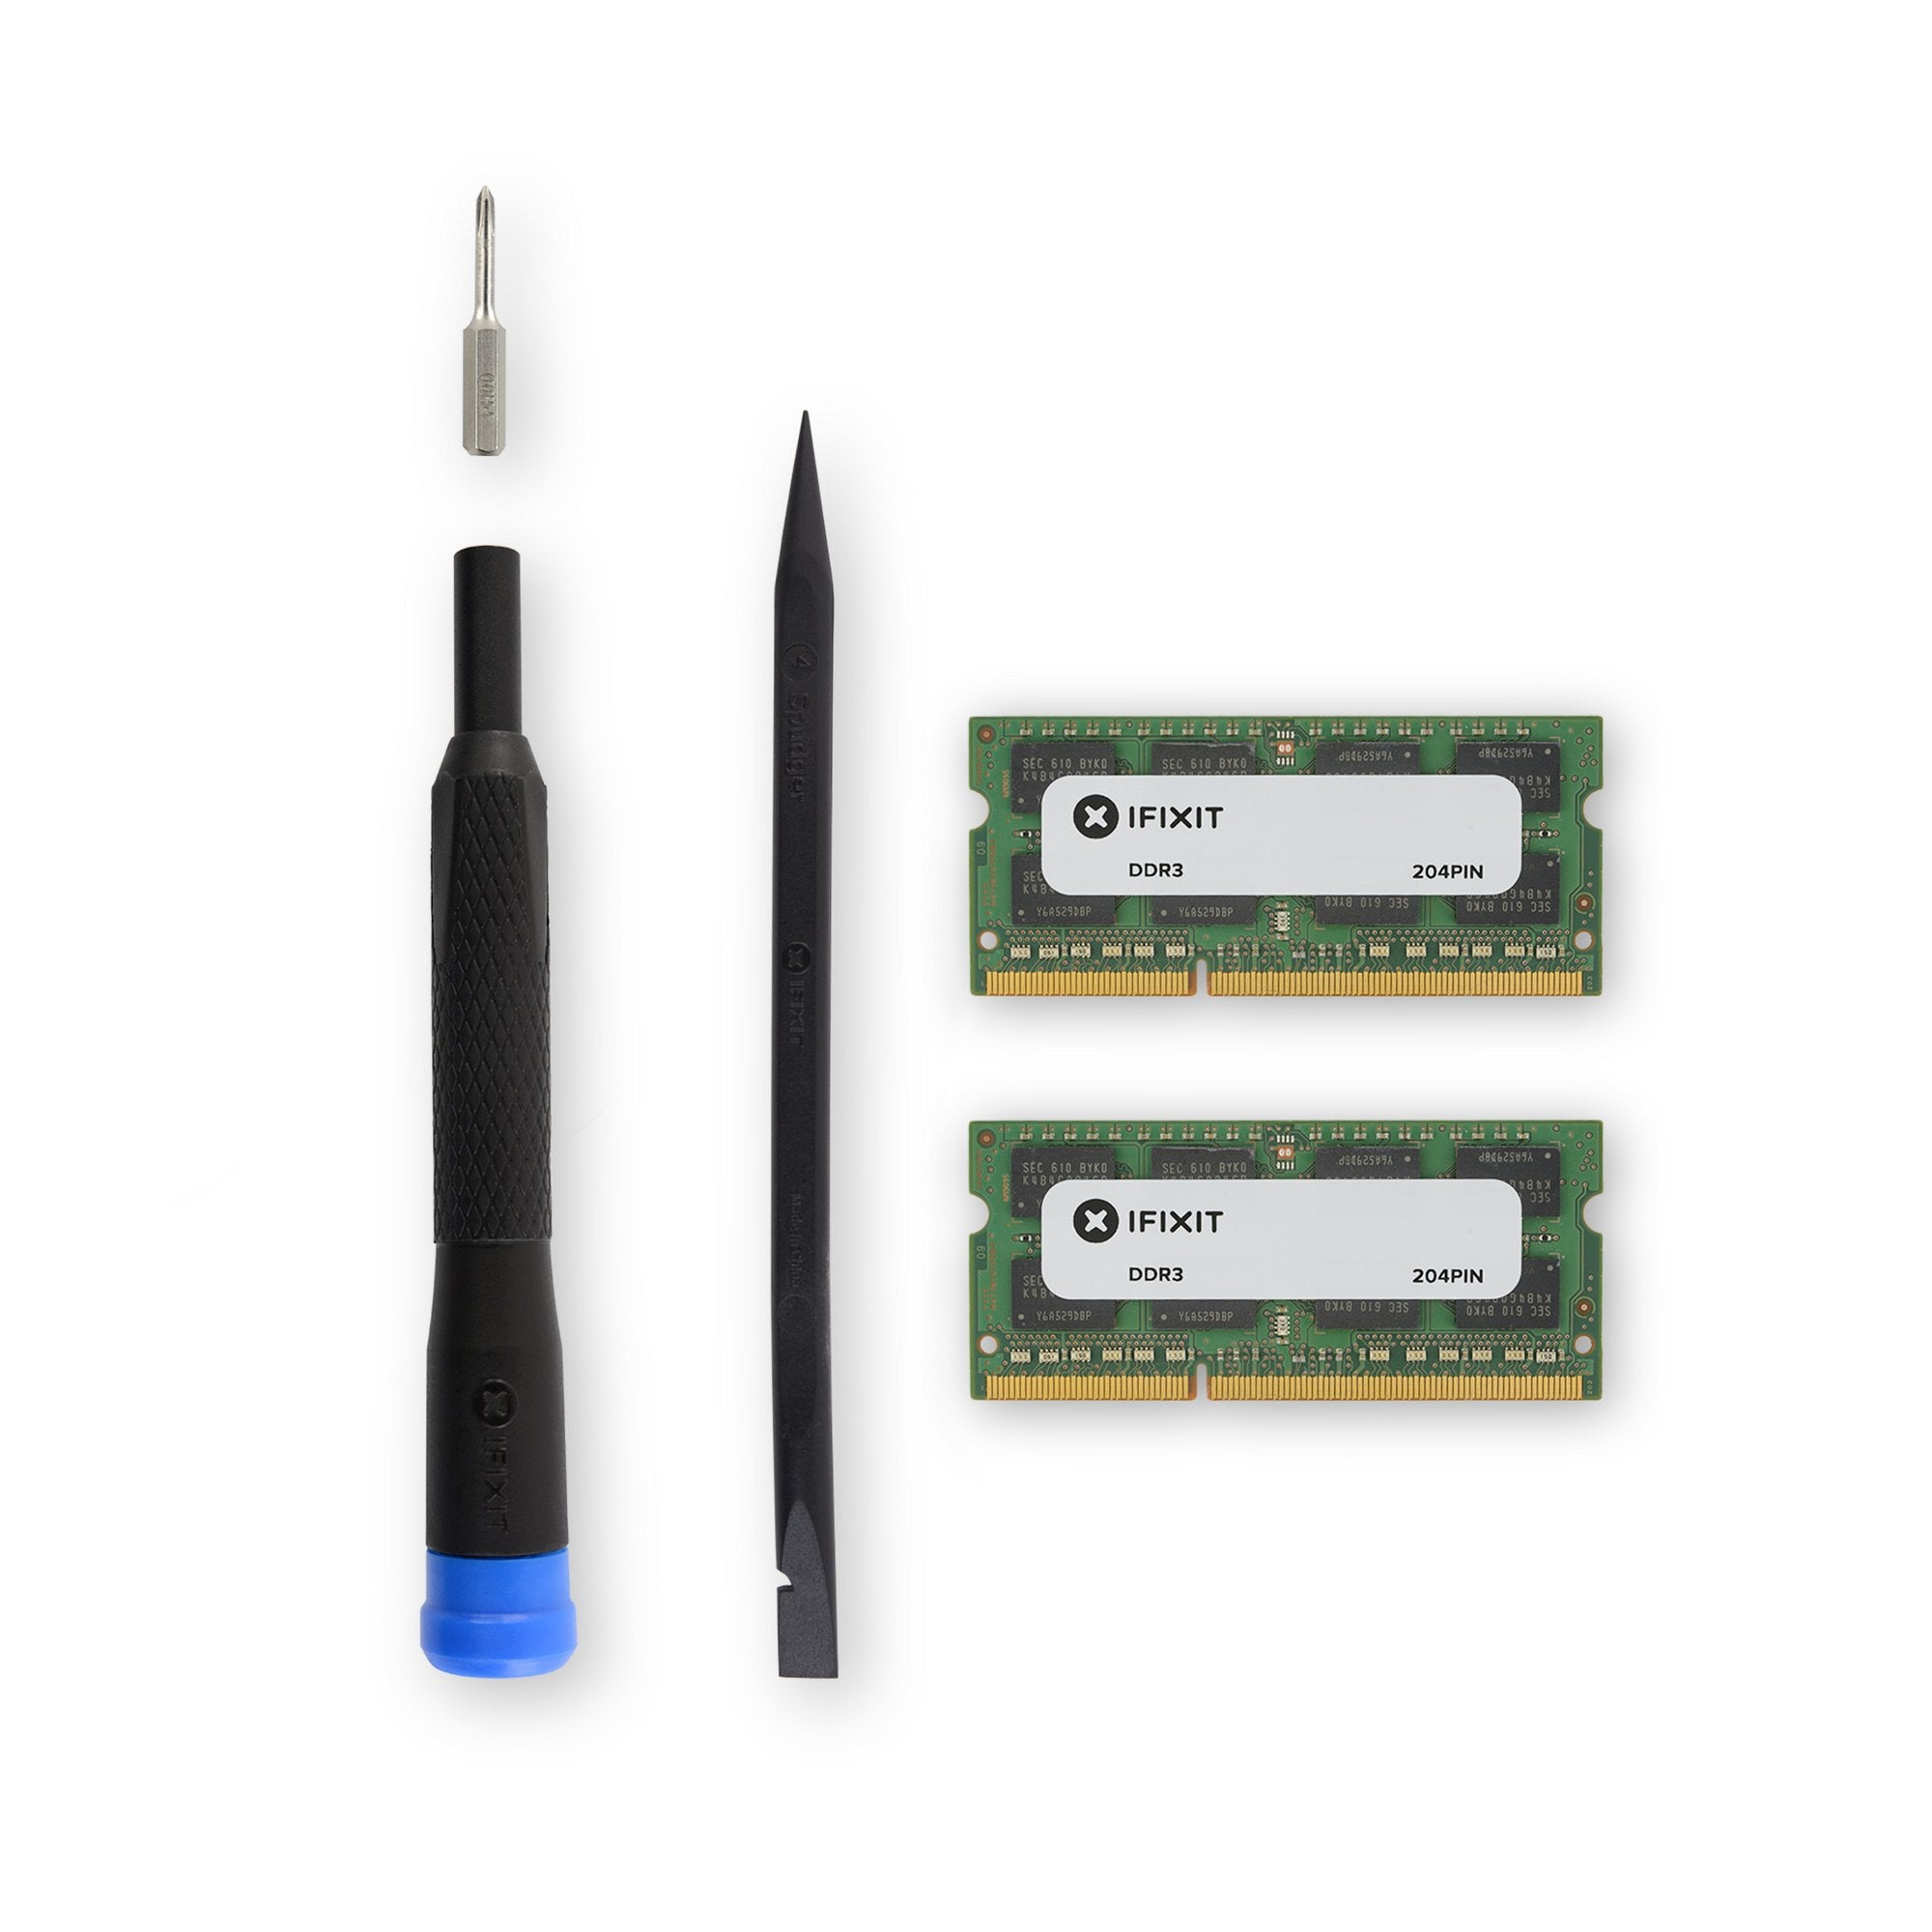 MacBook Pro 15" Unibody (Late 2008-Early 2009) Memory Maxxer RAM Upgrade Kit